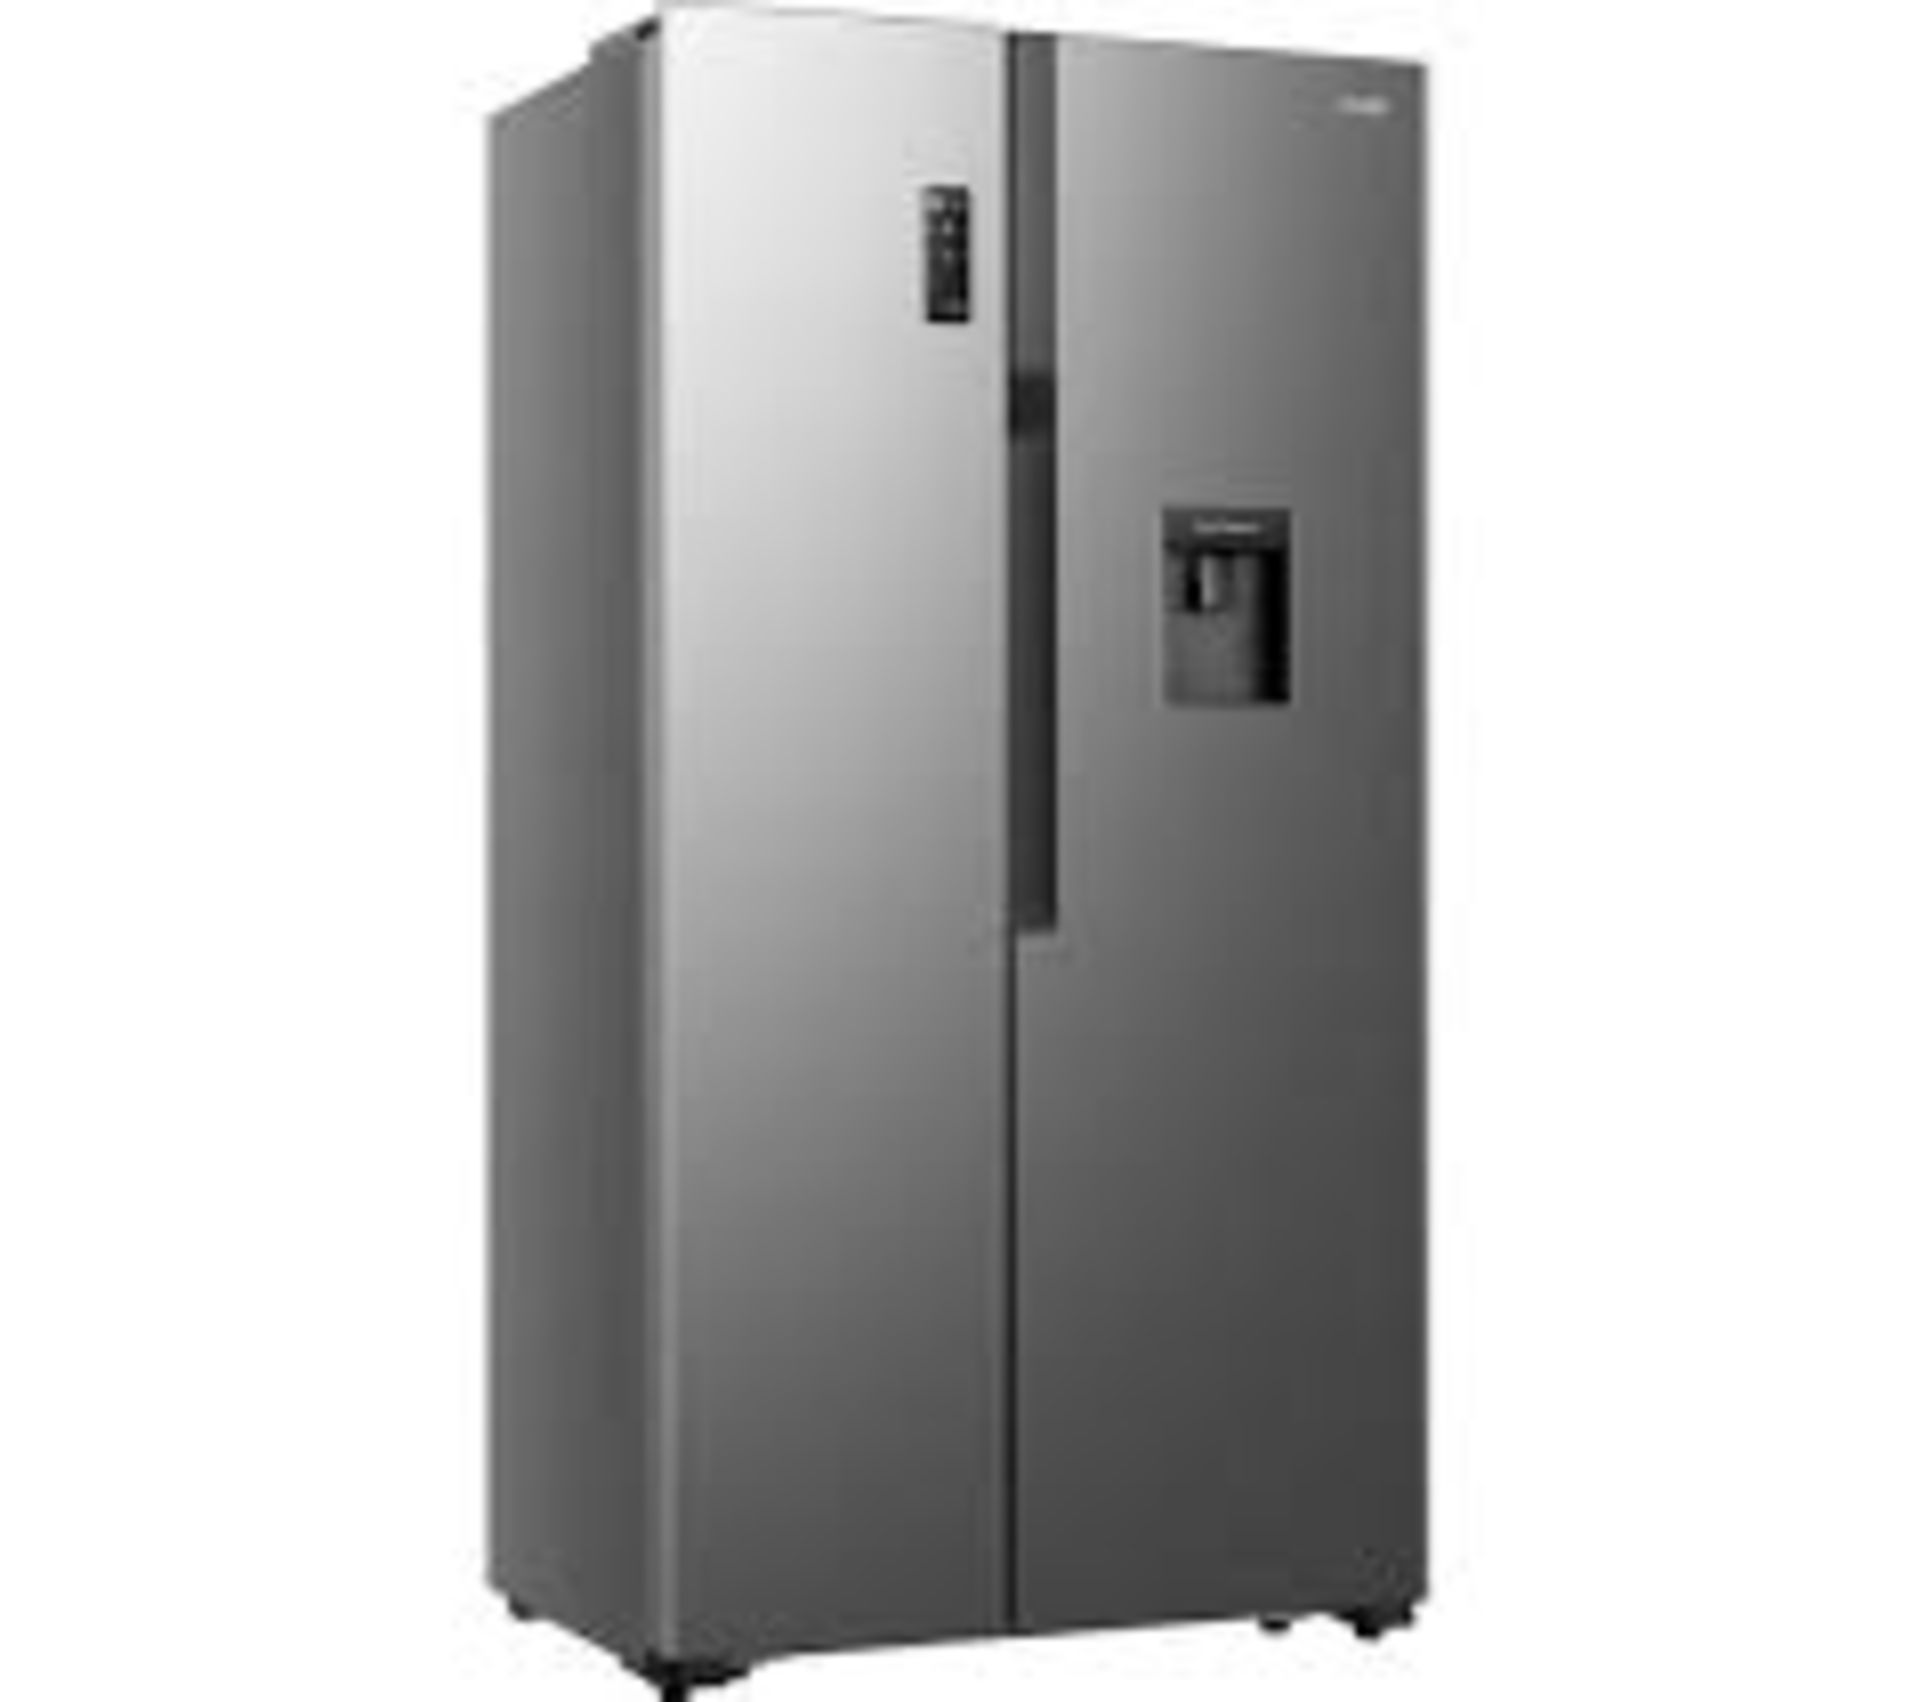 1 x Logik LSBSDX20 Stainless Steel American Fridge Freezer With Water Dispenser - Image 7 of 7